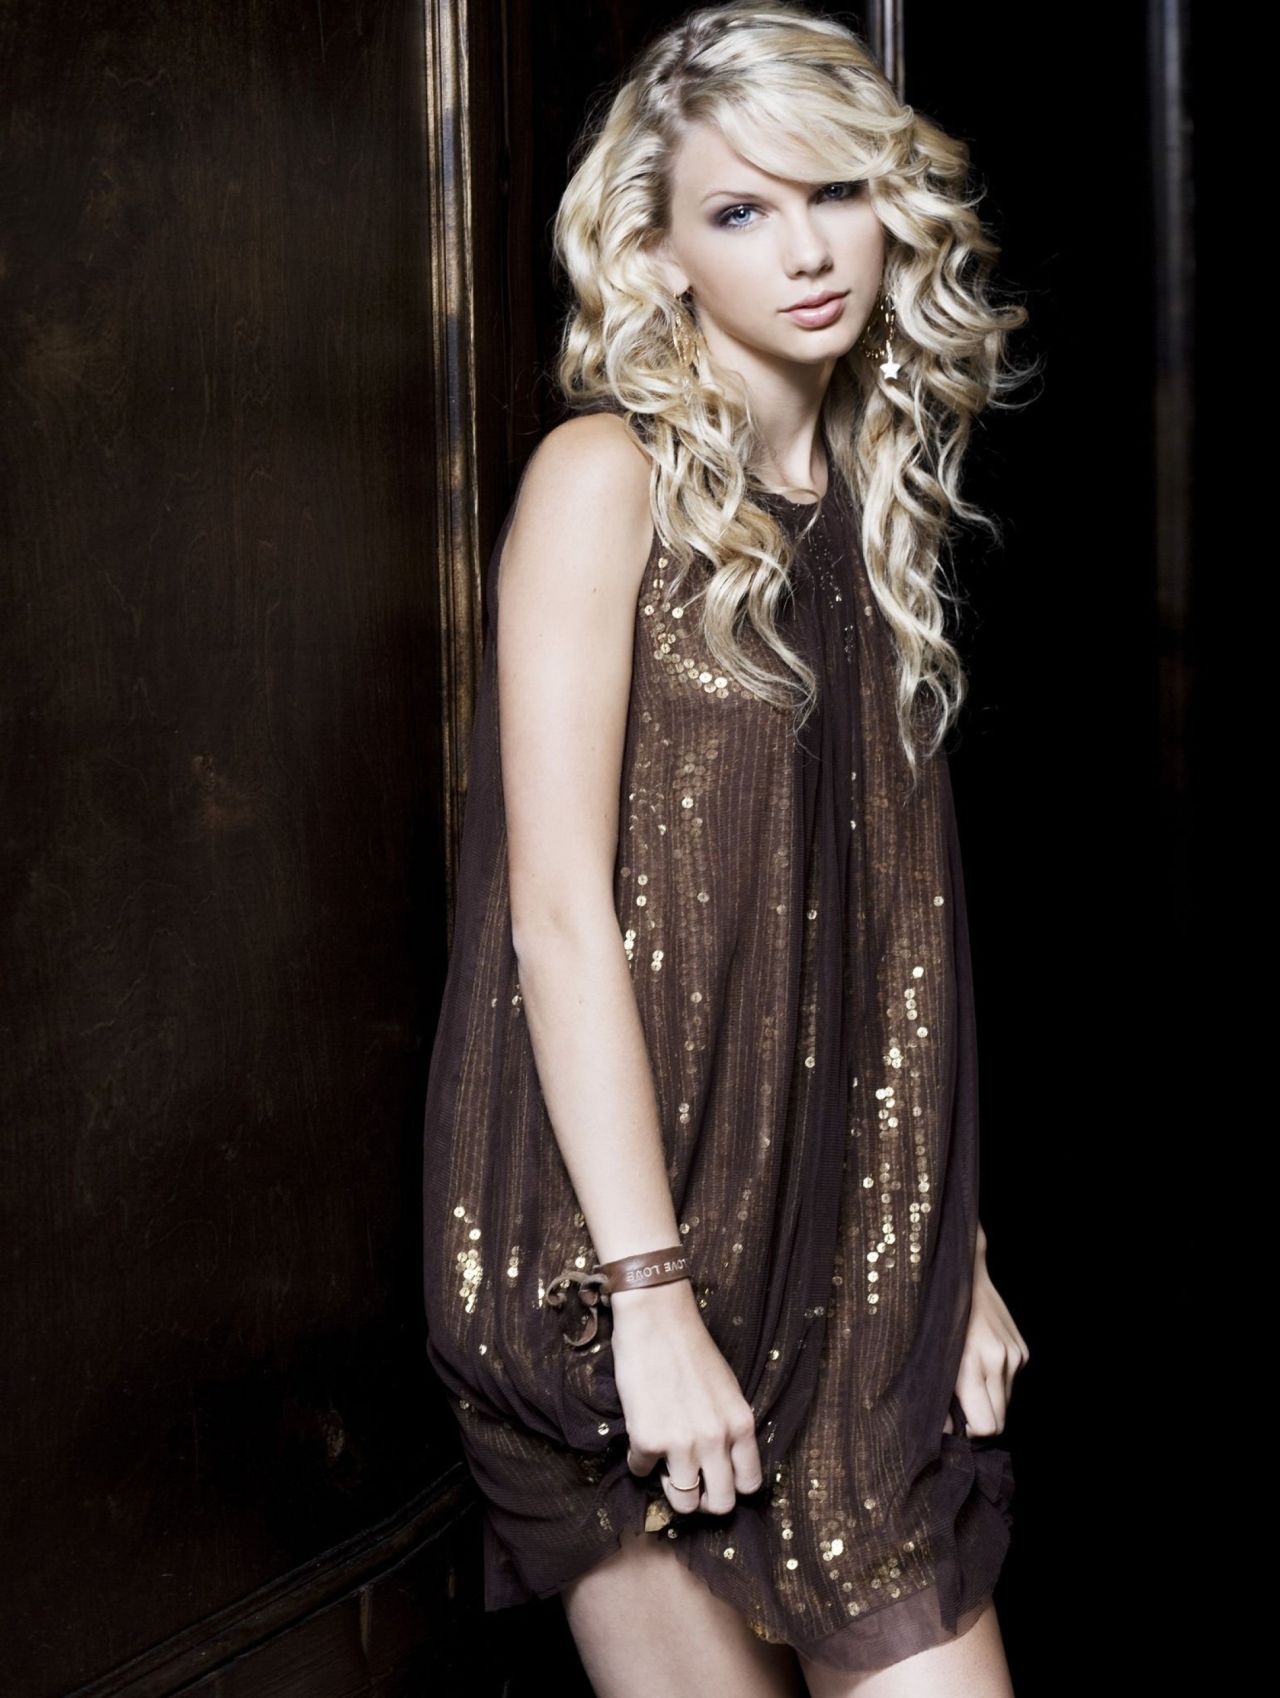 Тейлор дай. Тейлор Свифт 2007. Taylor Swift 2007. Тейлор Свифт фото в полный рост.